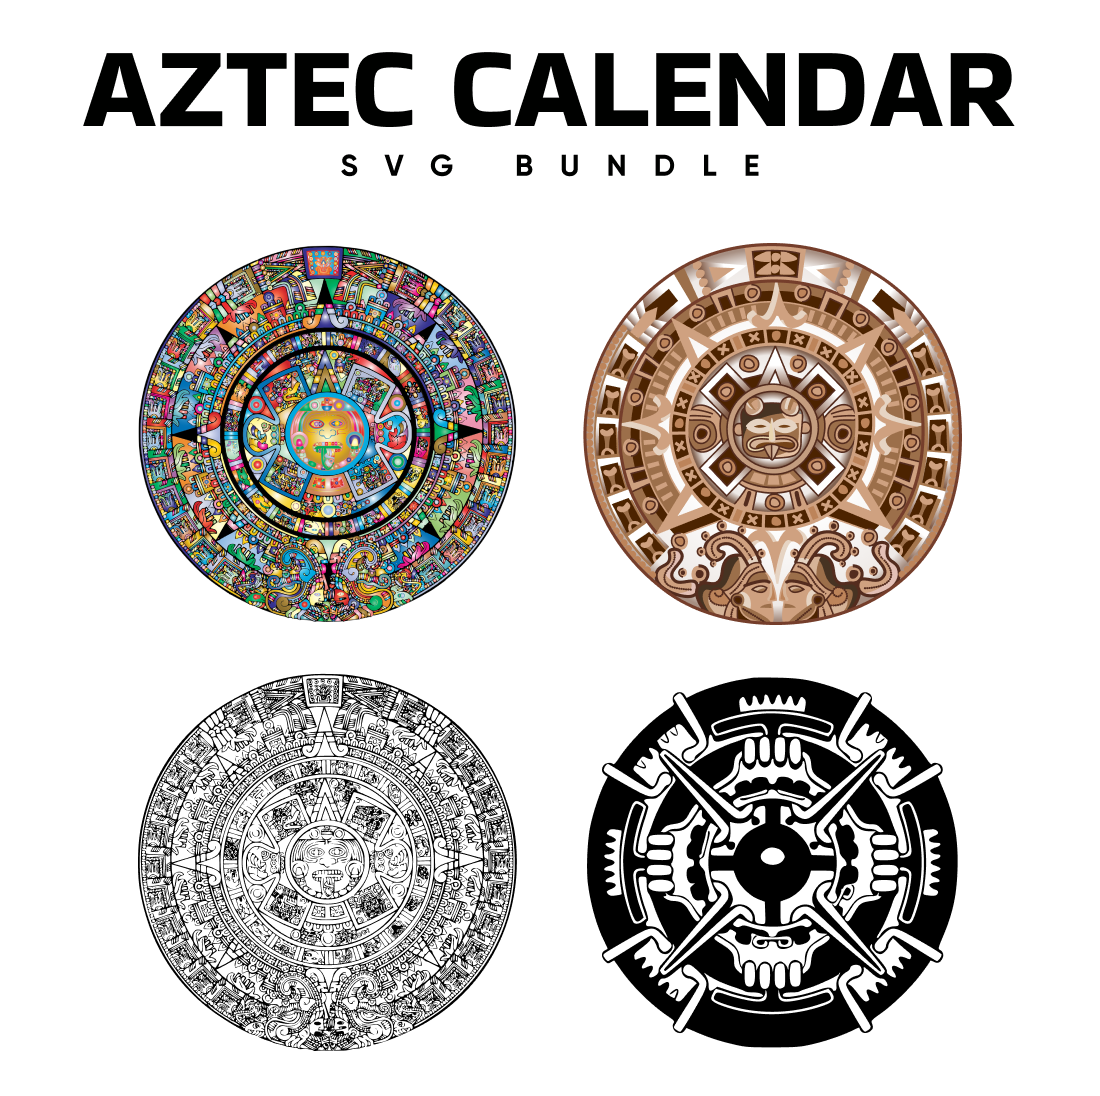 Aztec Calendar SVG.